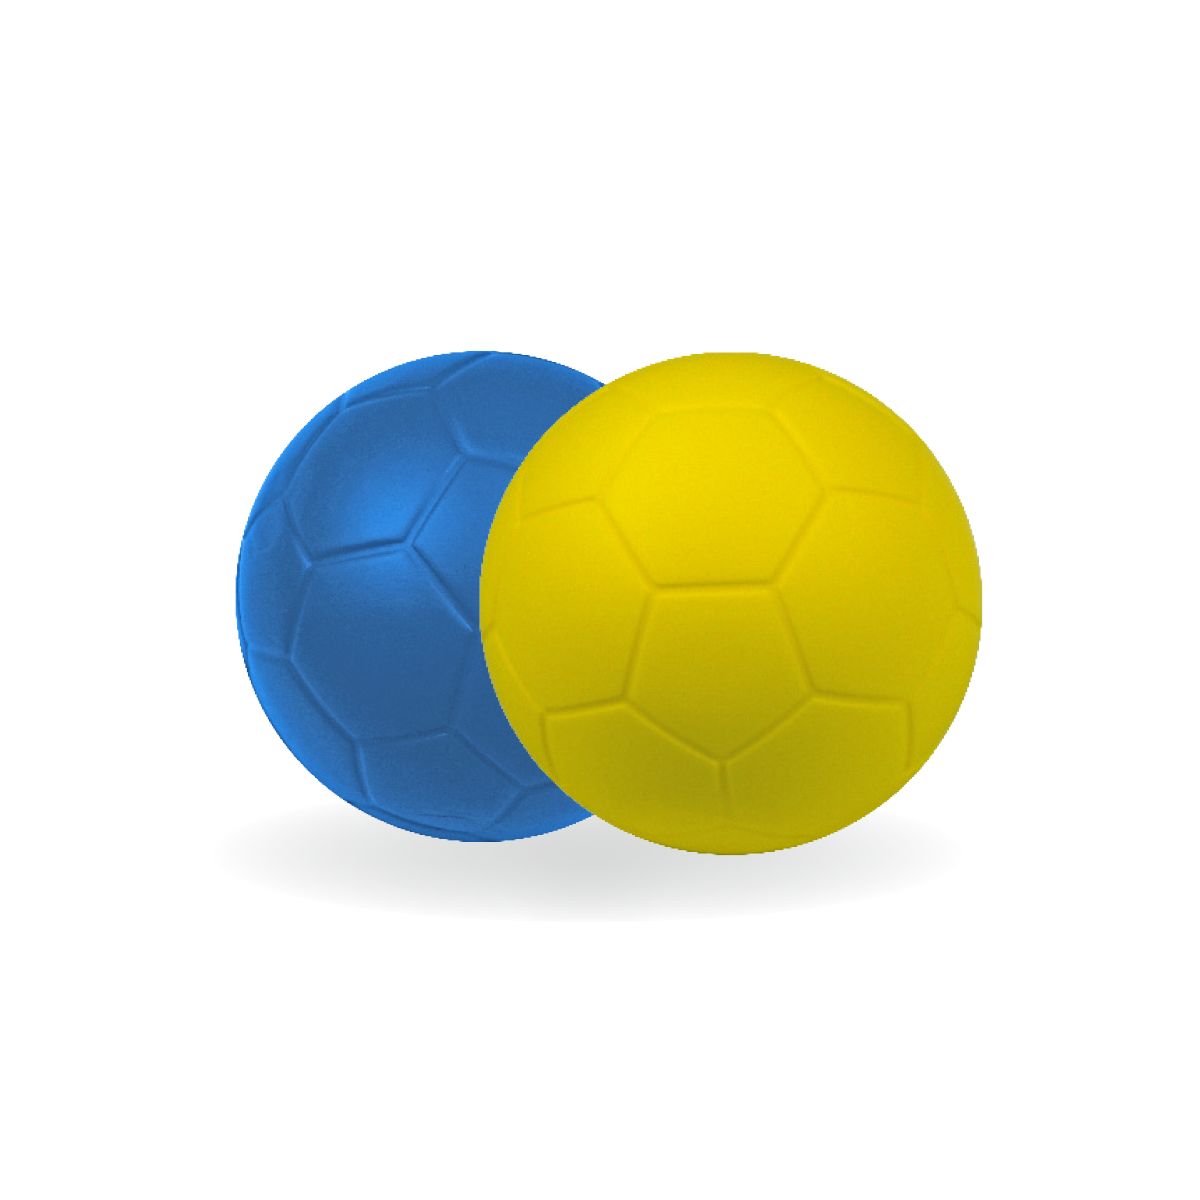 067233_ballon_de_handball_mousse_uni_dynamique_sportifrance (4)